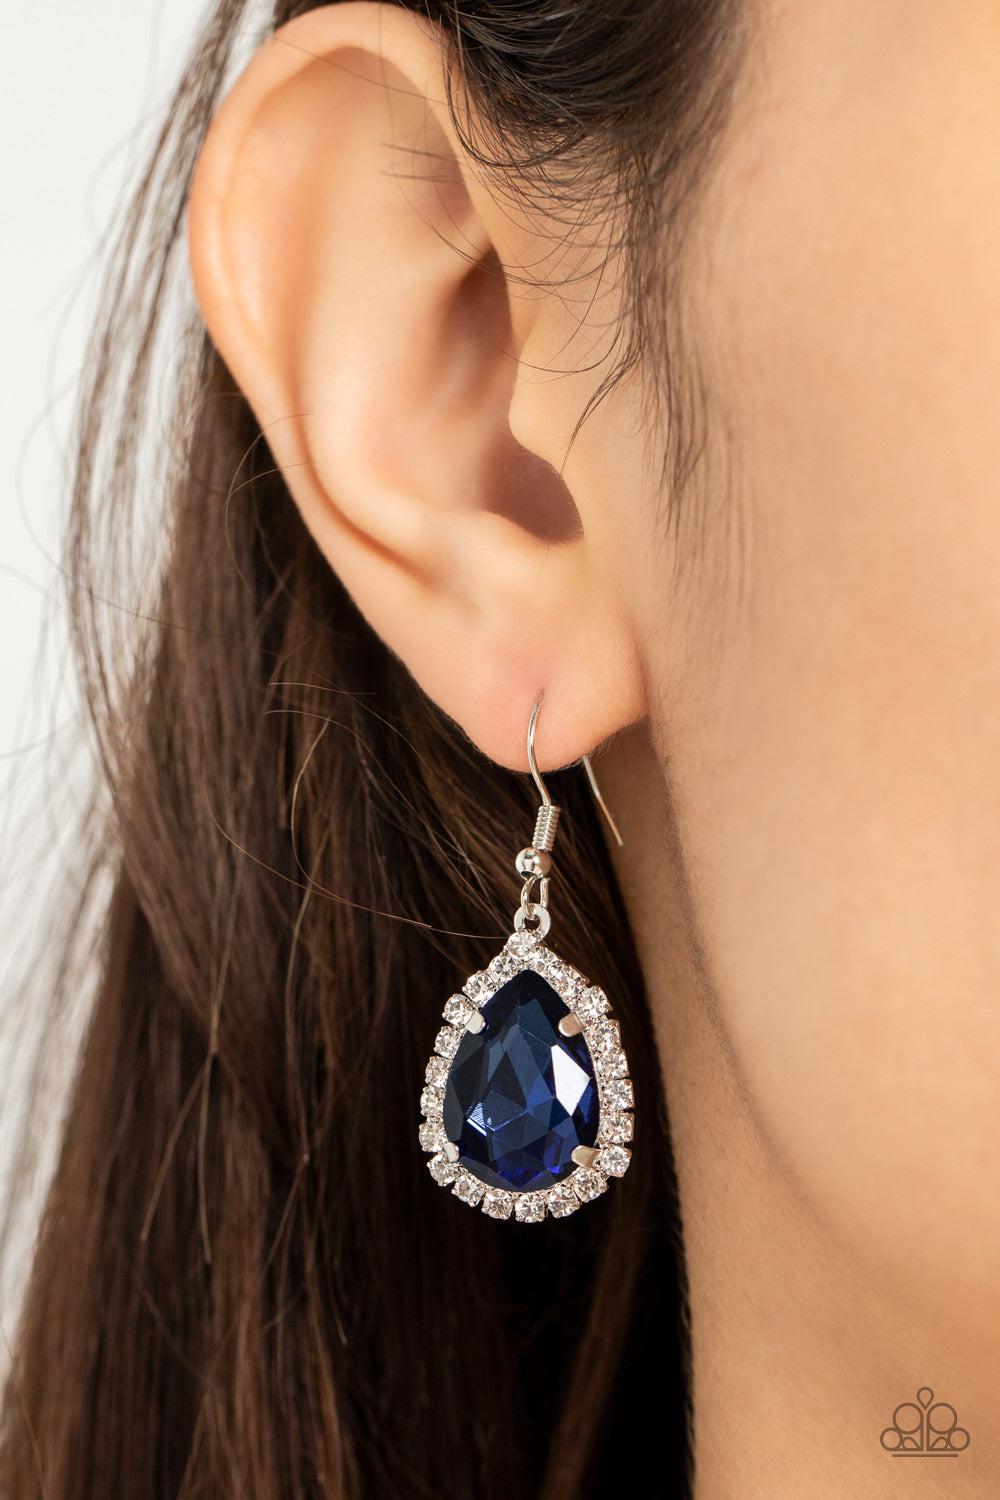 Bippity Boppity BOOM! Blue Rhinestone Earrings - Paparazzi Accessories-on model - CarasShop.com - $5 Jewelry by Cara Jewels